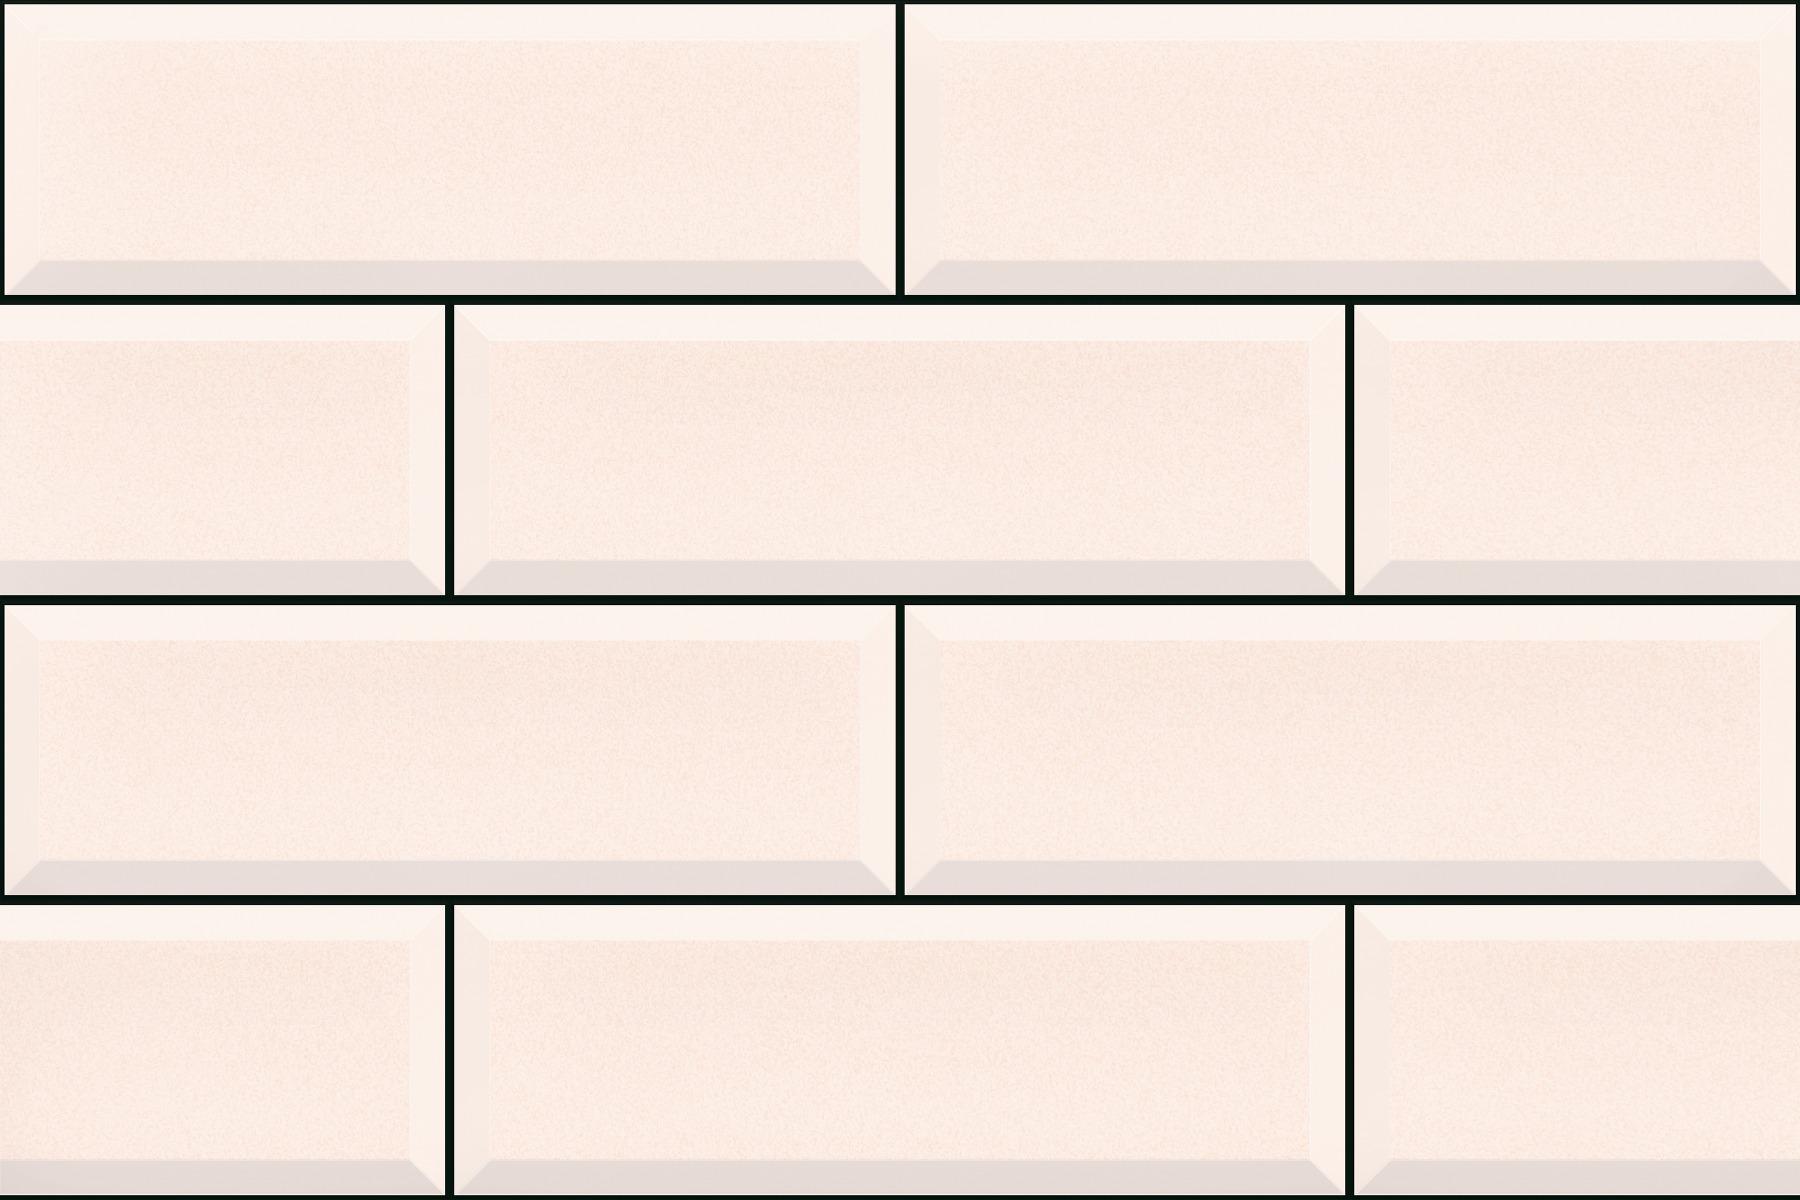 Accent Tiles for Bathroom Tiles, Living Room Tiles, Accent Tiles